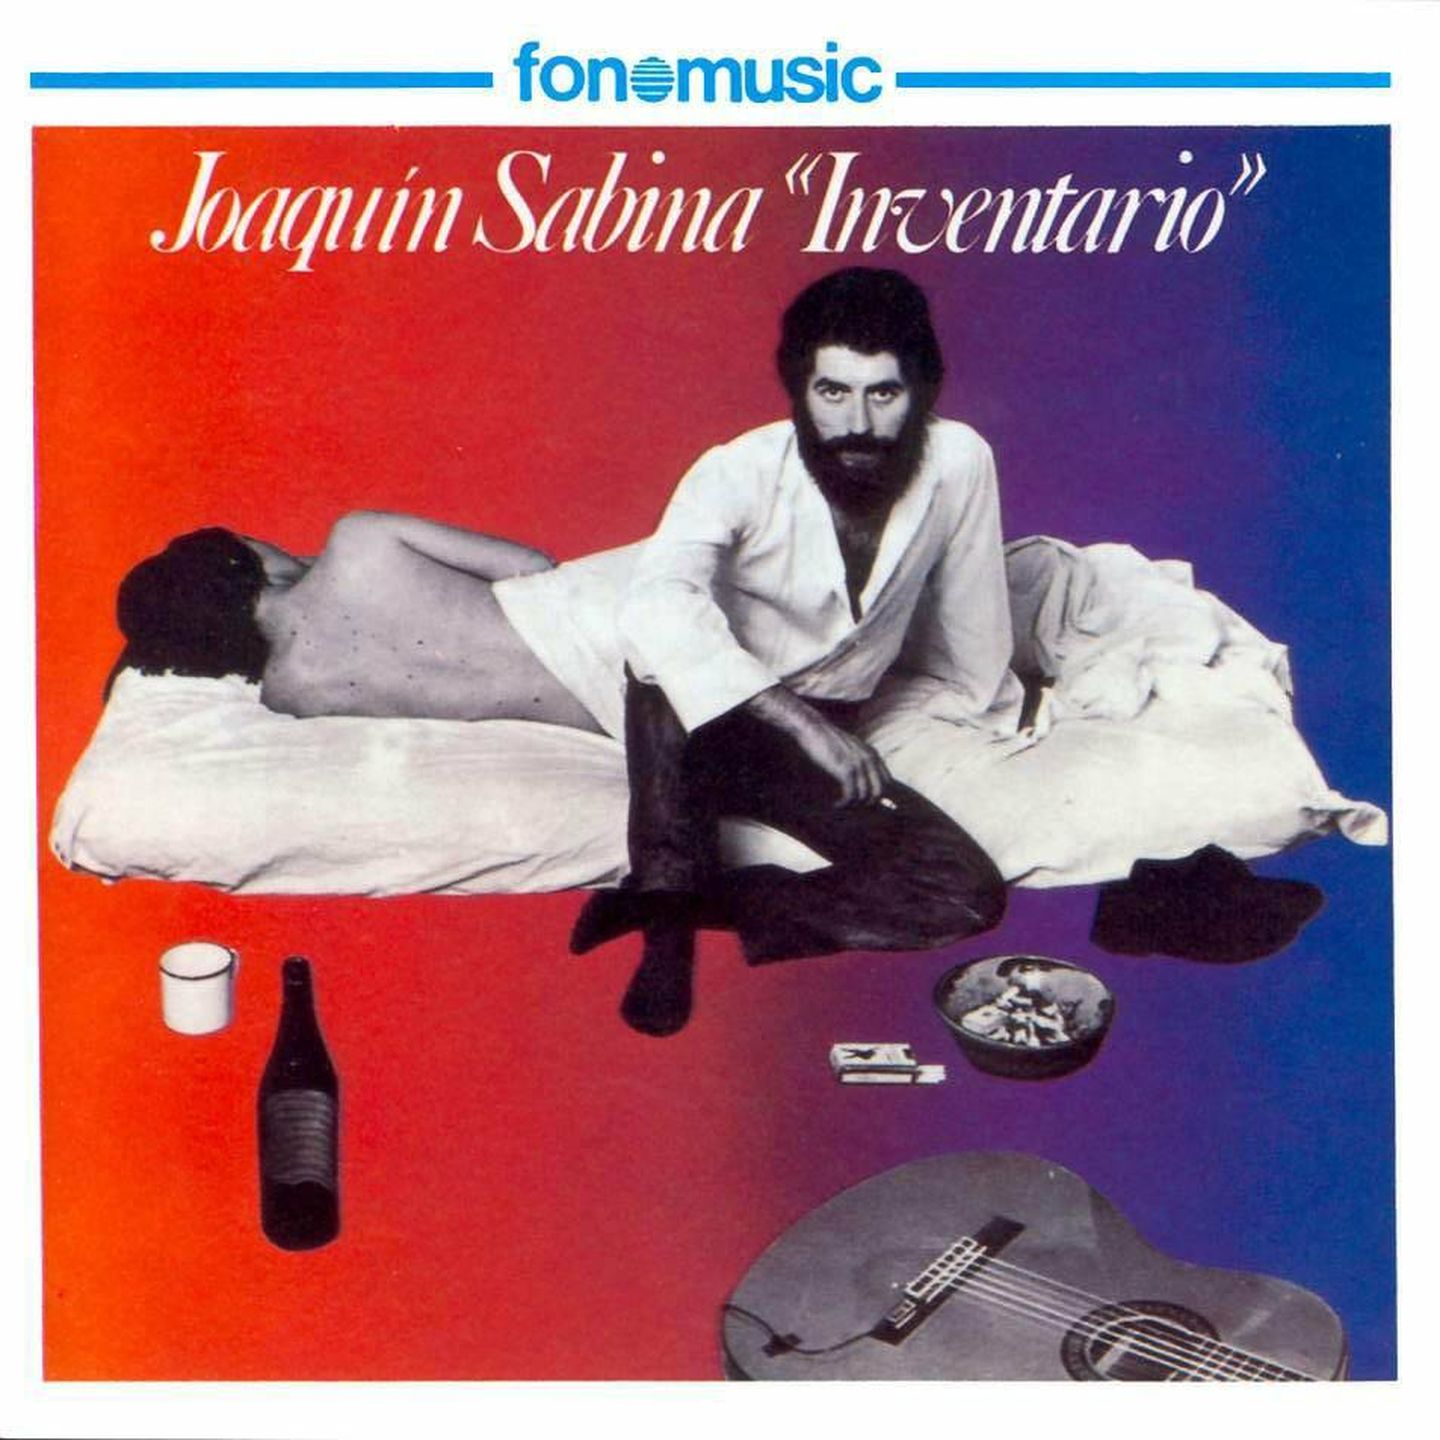 Foto de portada de 'Inventario' primer disco de Joaquín Sabina. (Cortesía Fonomusic)